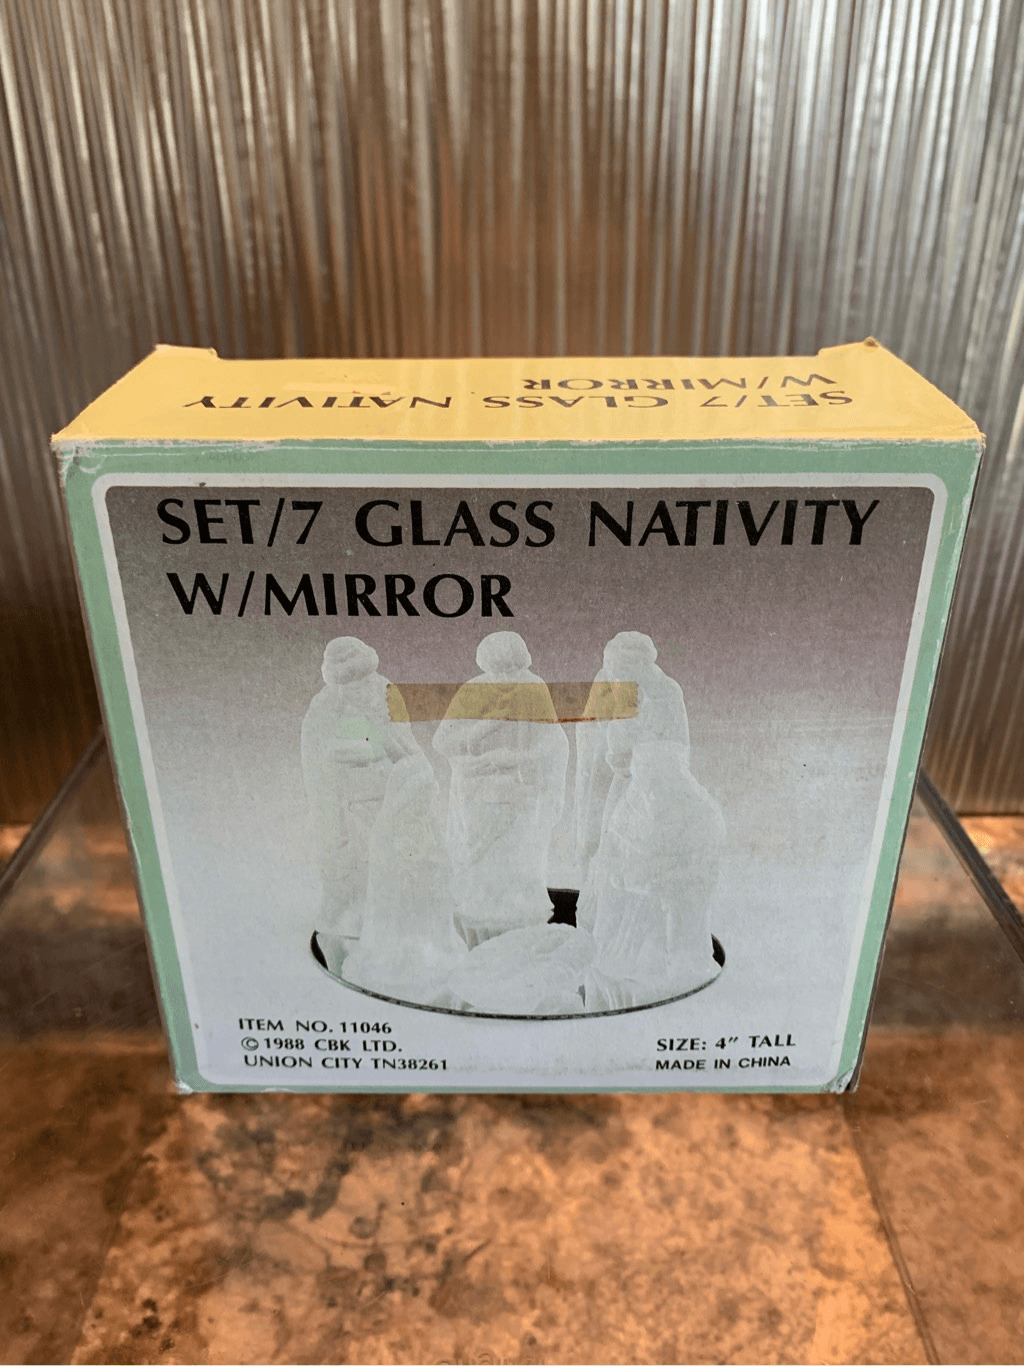 Vintage 1988 Set/7 Glass Nativity Set W/Mirror 4” tall